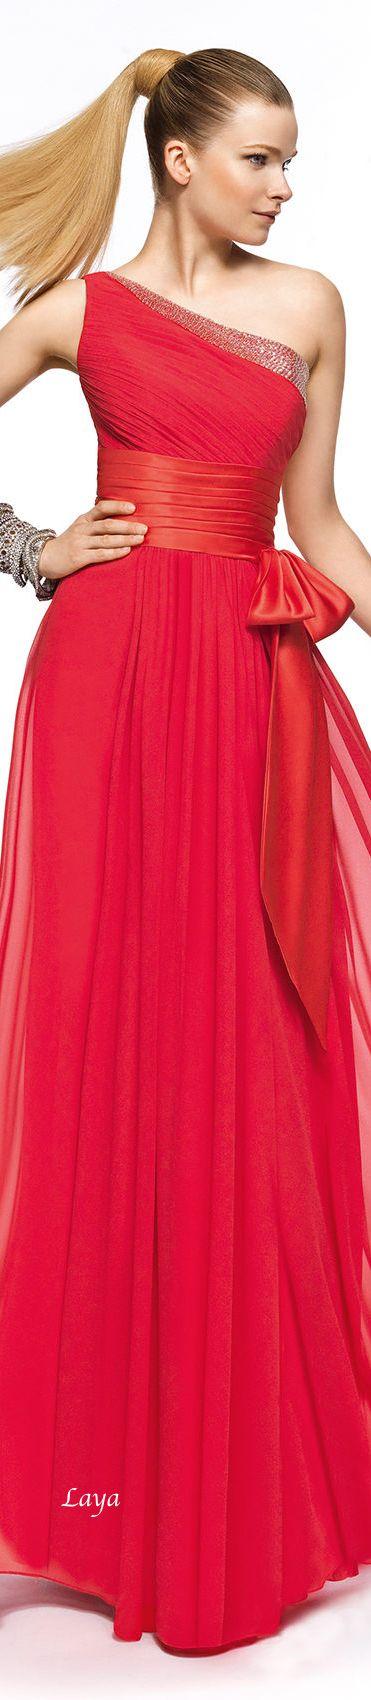 زفاف - Gowns...Ravishing Reds